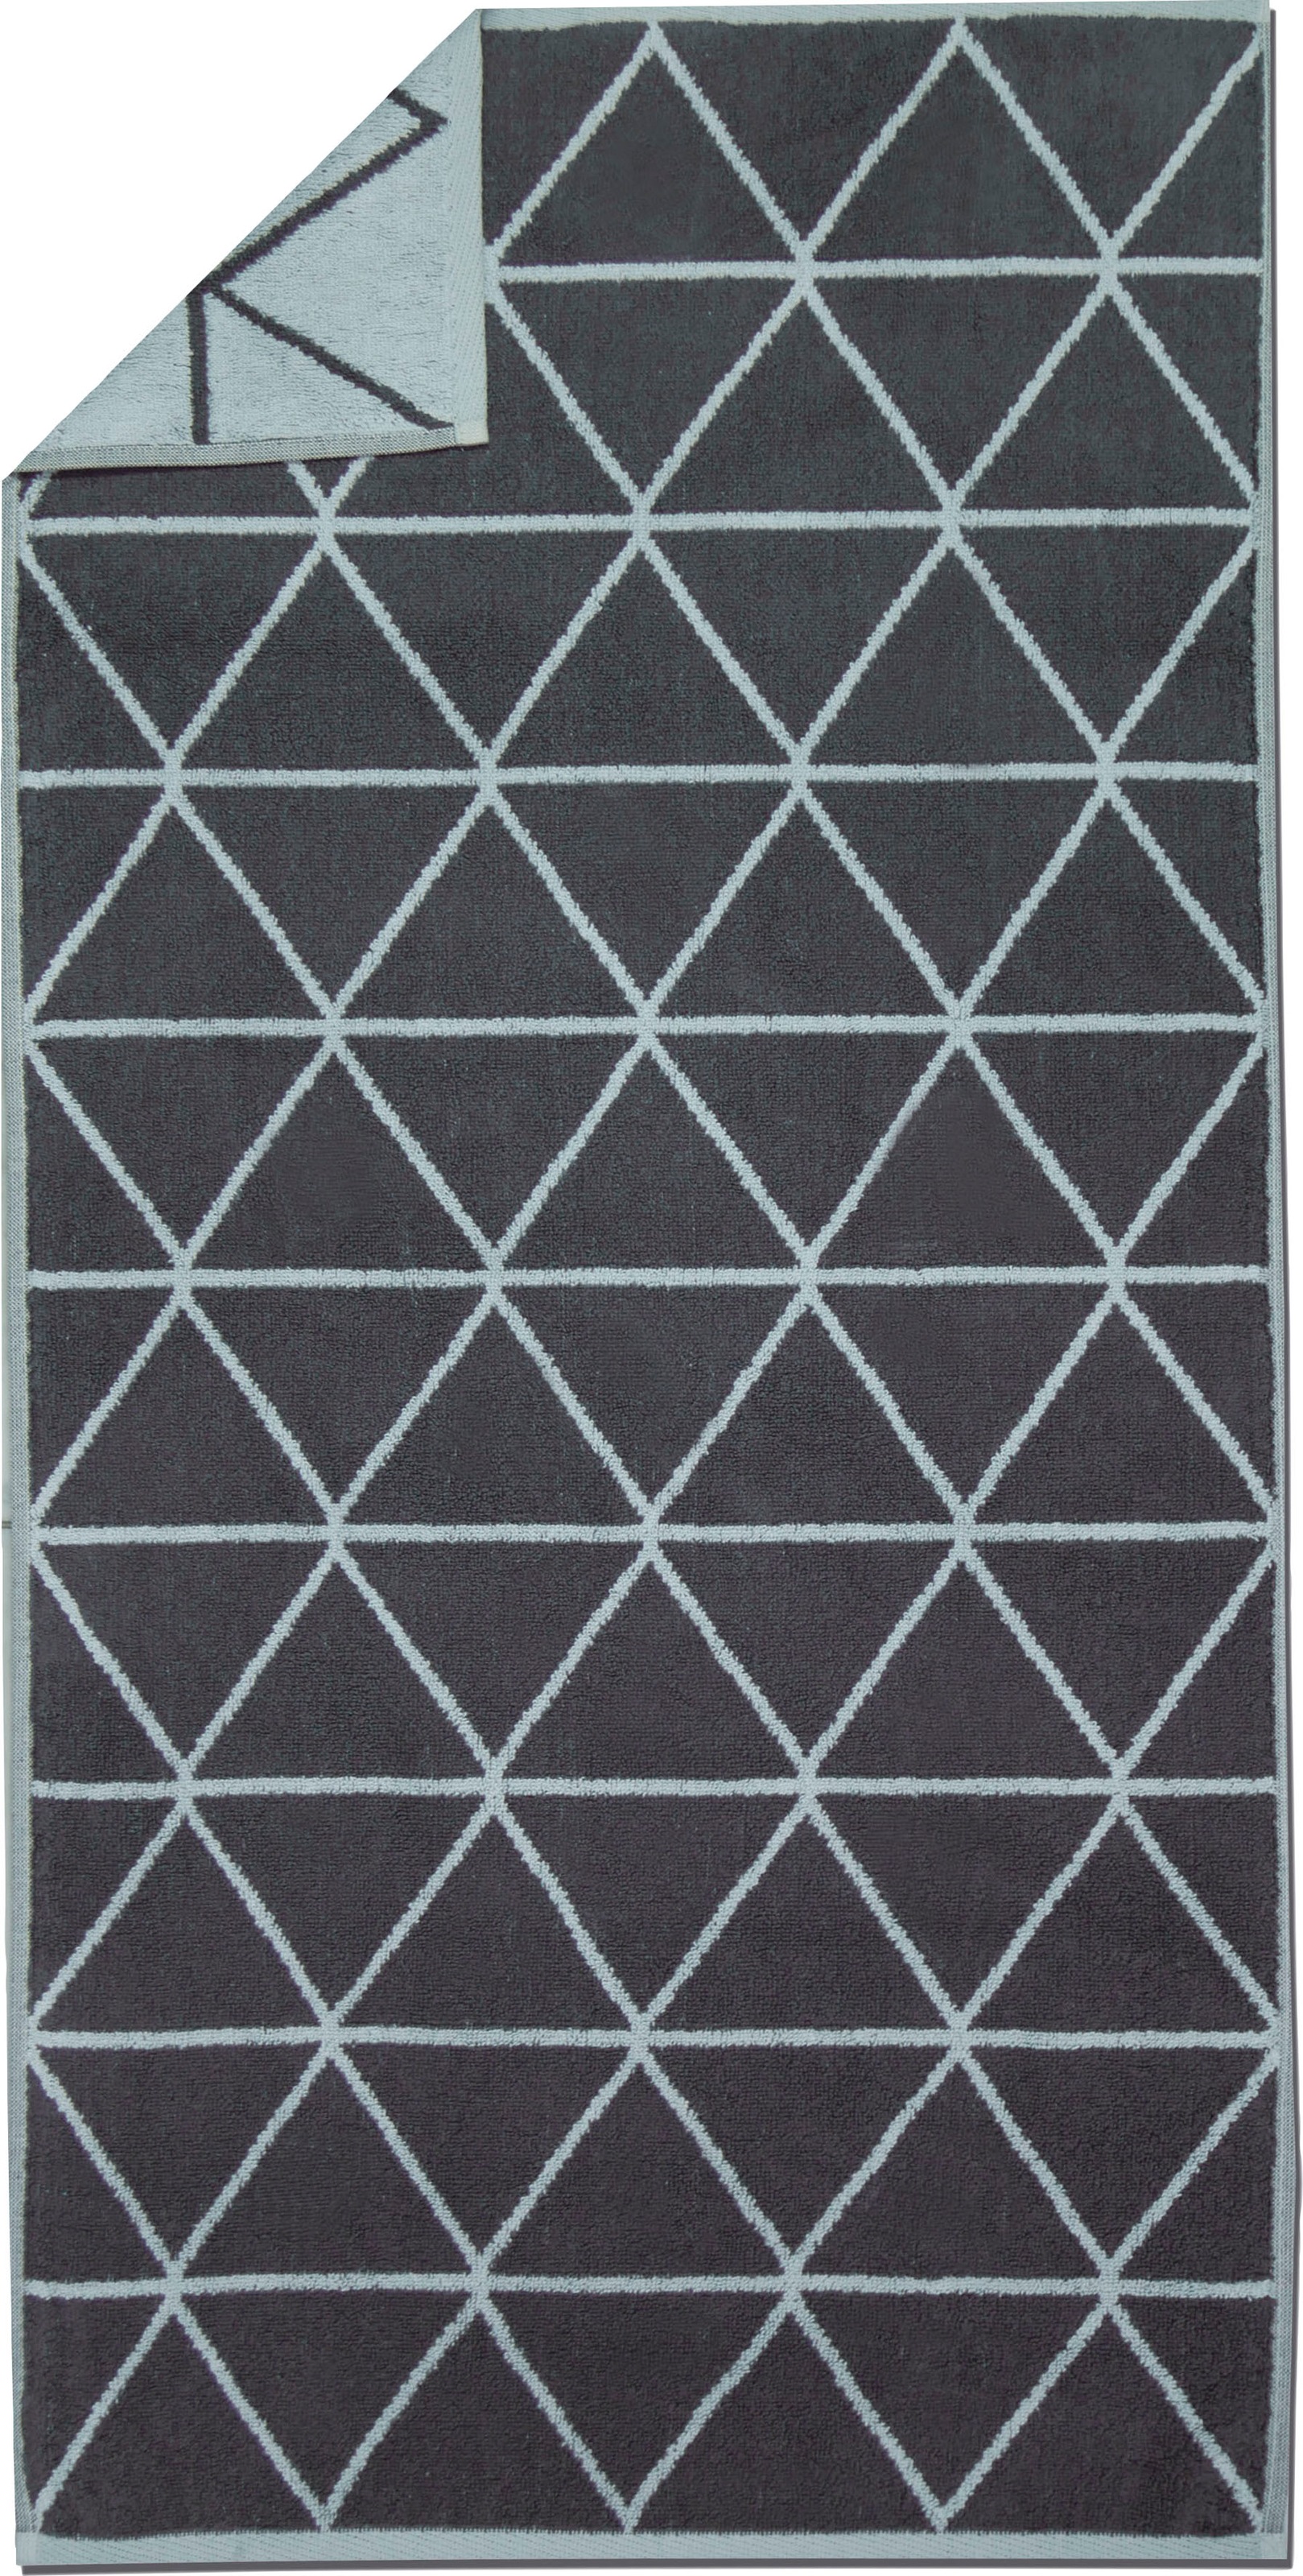 skandinavischem Design Handtücher (2 Triangle mit bei kaufen Graphics«, freundin St.), »Freundin Collection OTTO Home